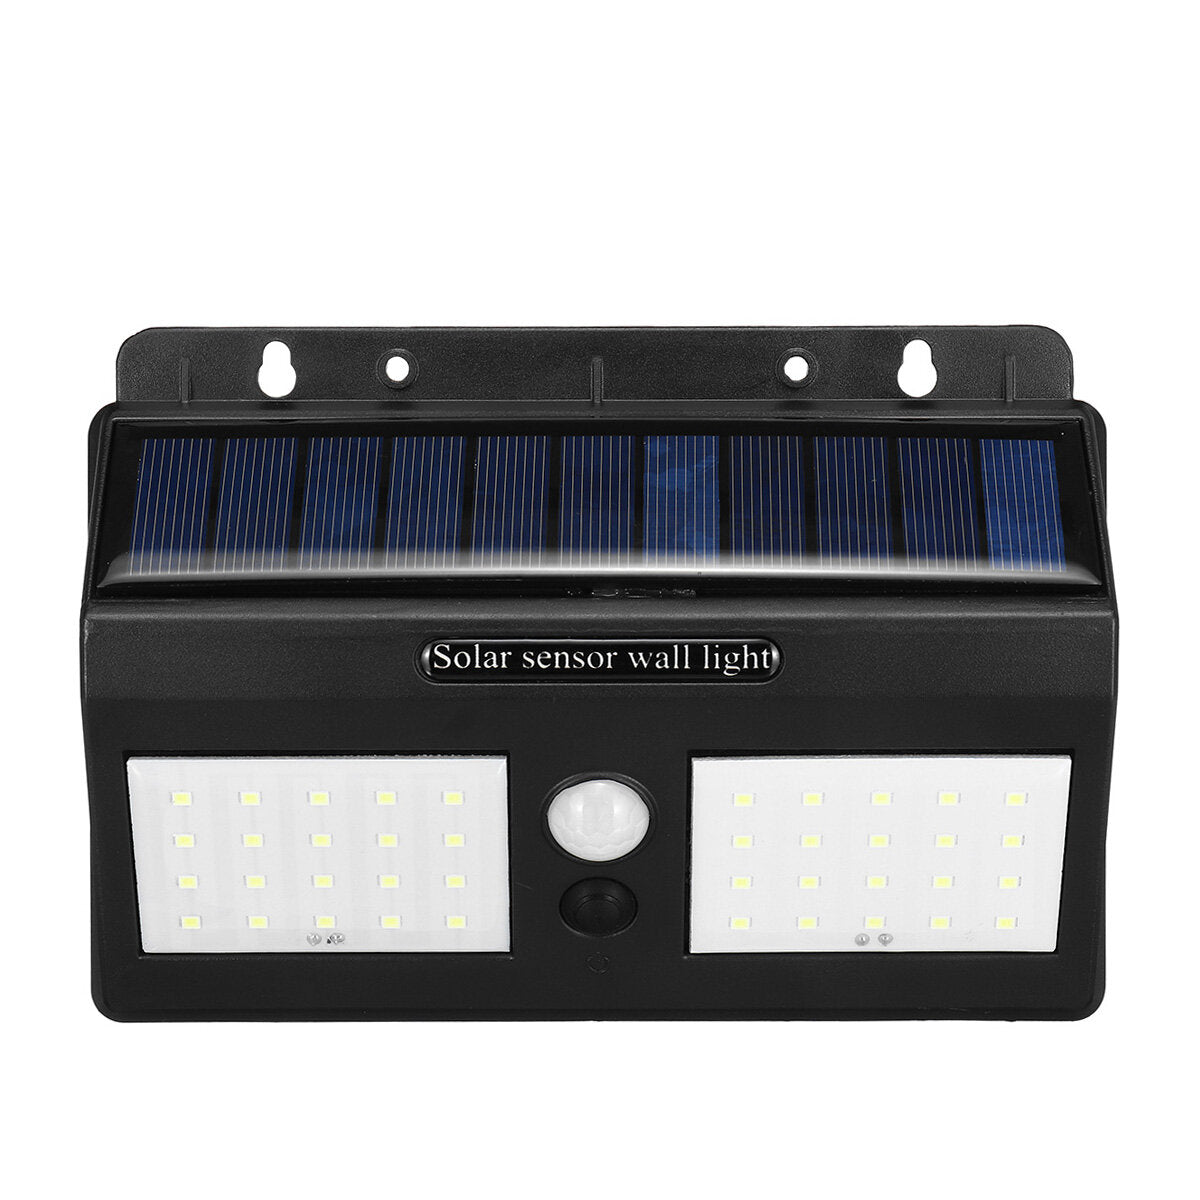 30/40 LED IP65 Auto Sensing Solar Light Outdoor Solar Power Wall lamp Waterproof PIR Motion Sensor For Garden Yard Patio